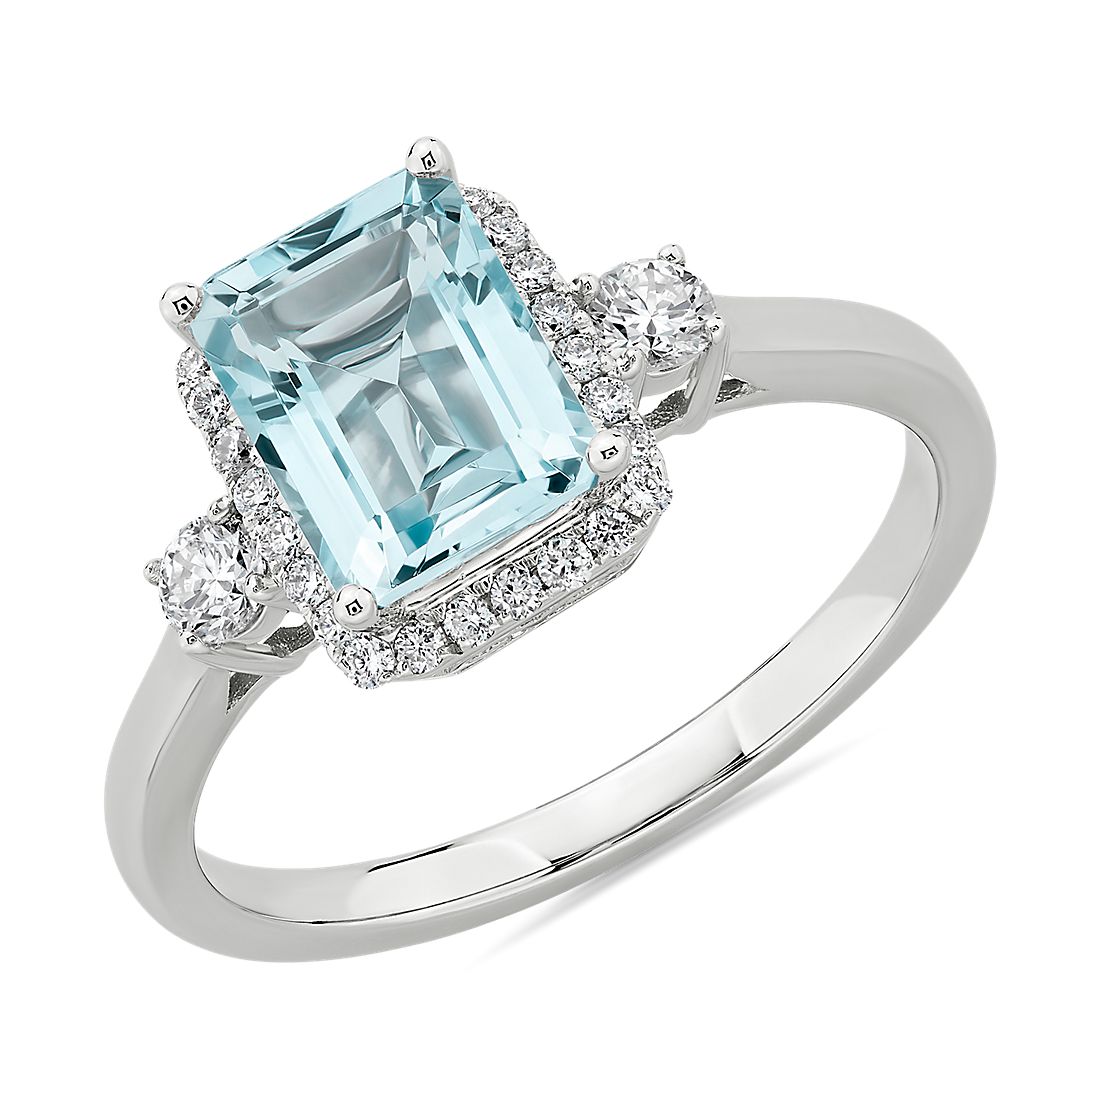 Aquamarine ring with diamond halo